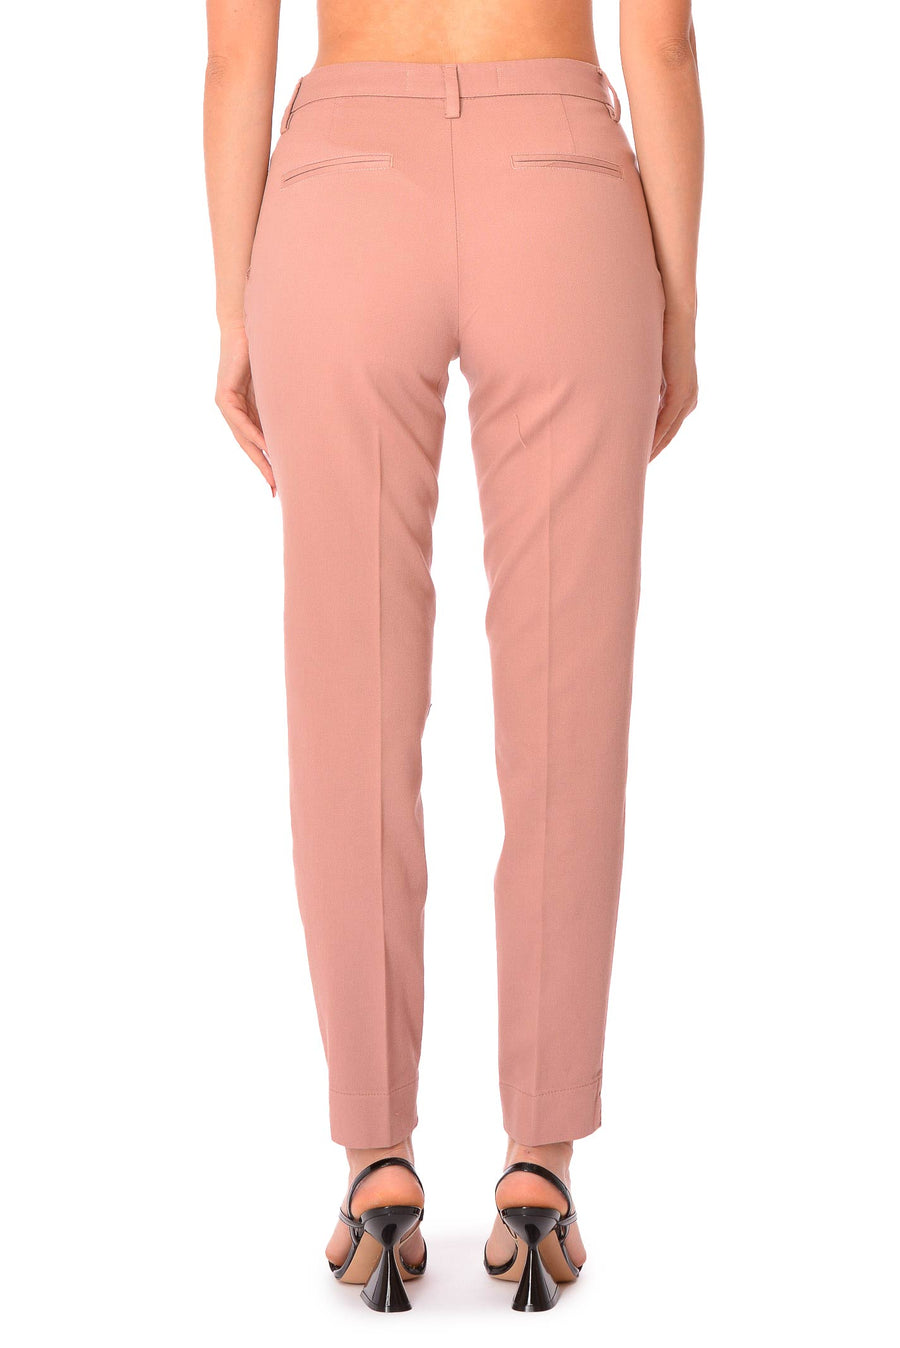 Pantalone capri rosa